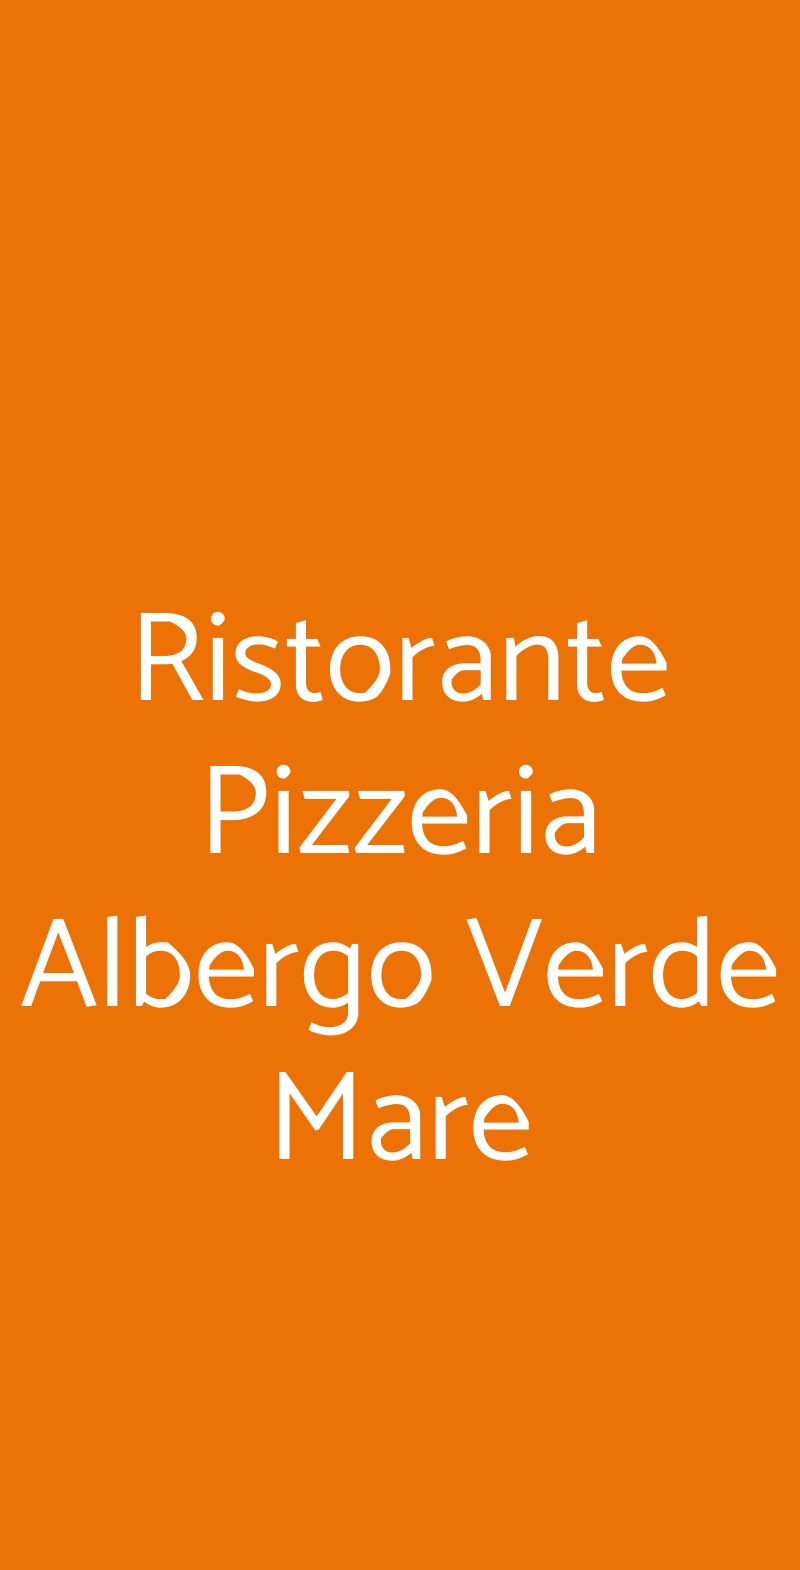 Ristorante Pizzeria Albergo Verde Mare Santarcangelo di Romagna menù 1 pagina